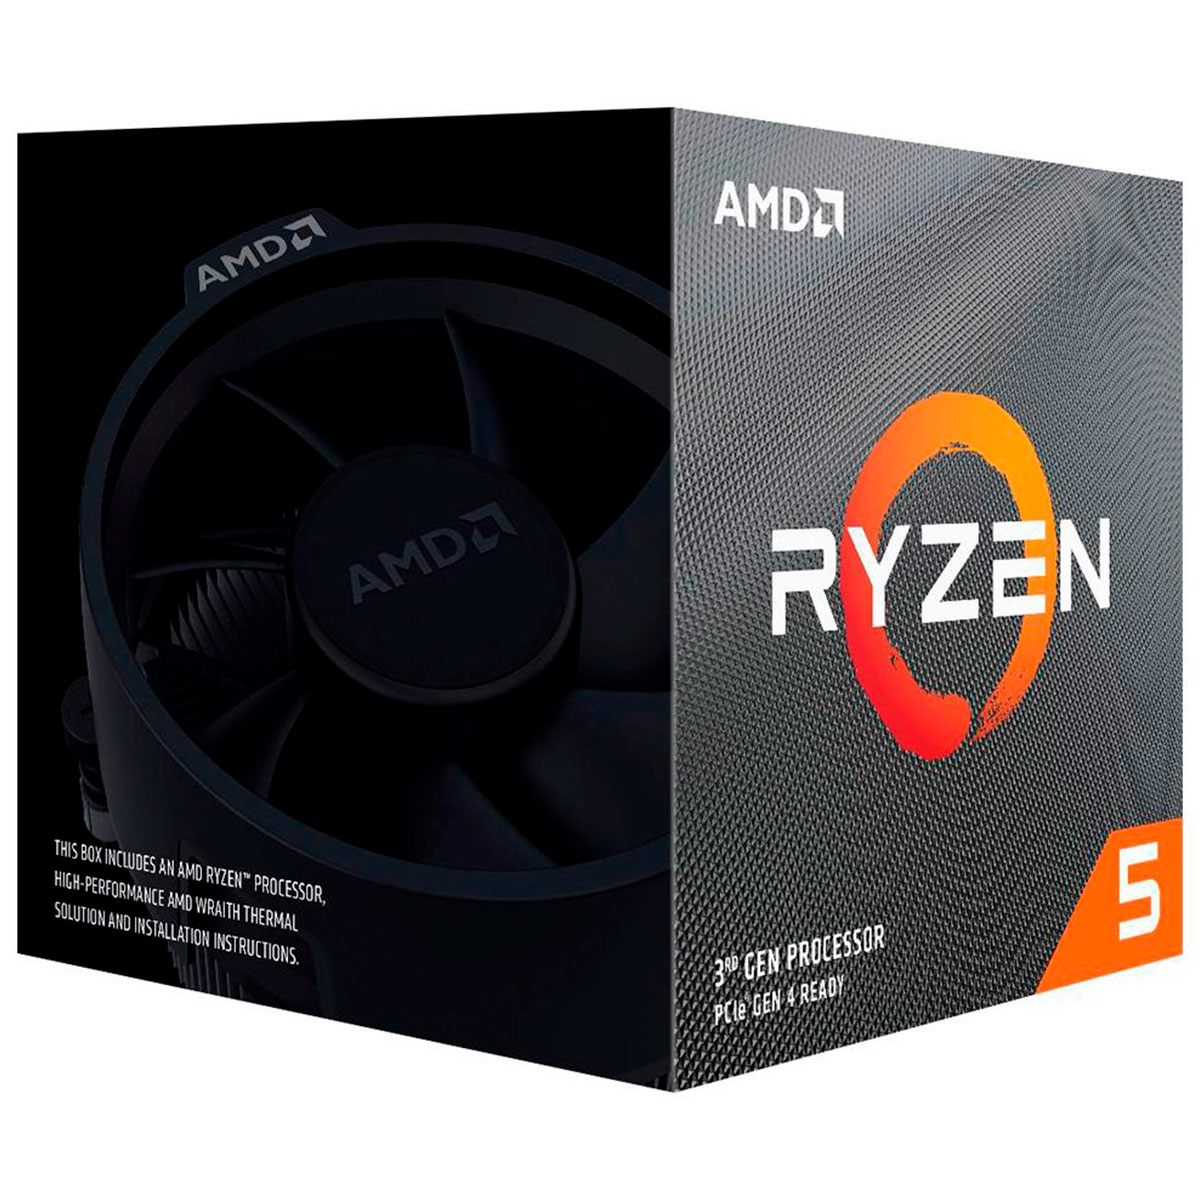 AMD Ryzen 5 3600 Hexa Core - 3.6GHz (Turbo 4.2GHz) - Cache 32MB - AM4 - TDP 65W - 100-100000031SBX - sem gráfico integrado